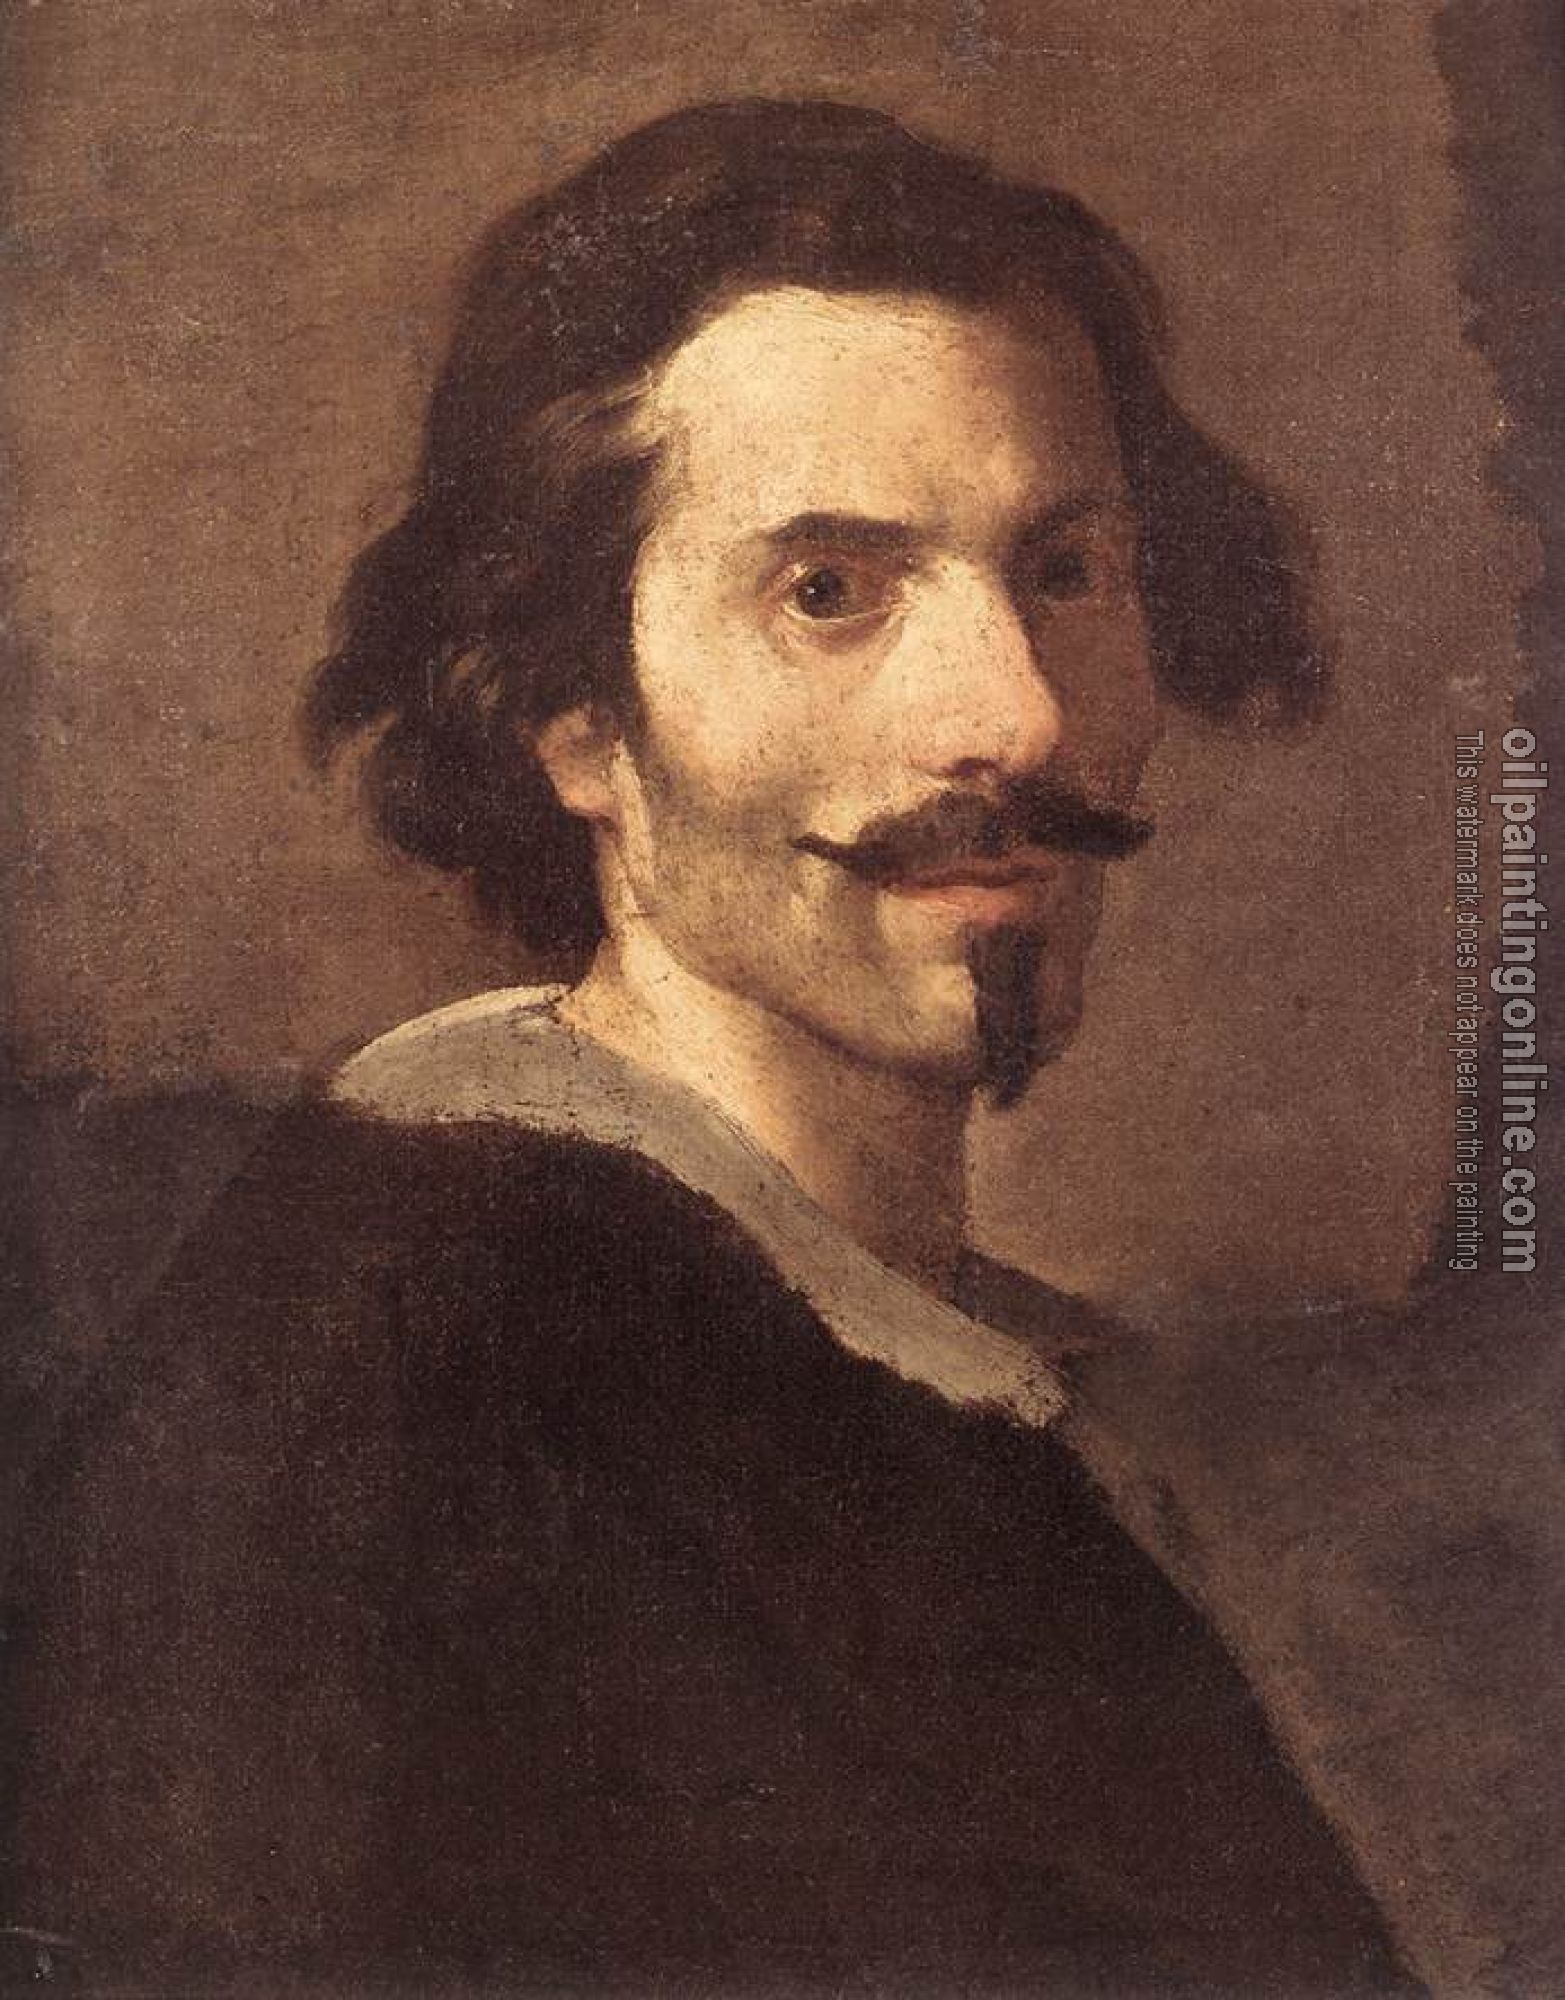 Bernini, Gian Lorenzo - Self-Portrait as a Mature Man